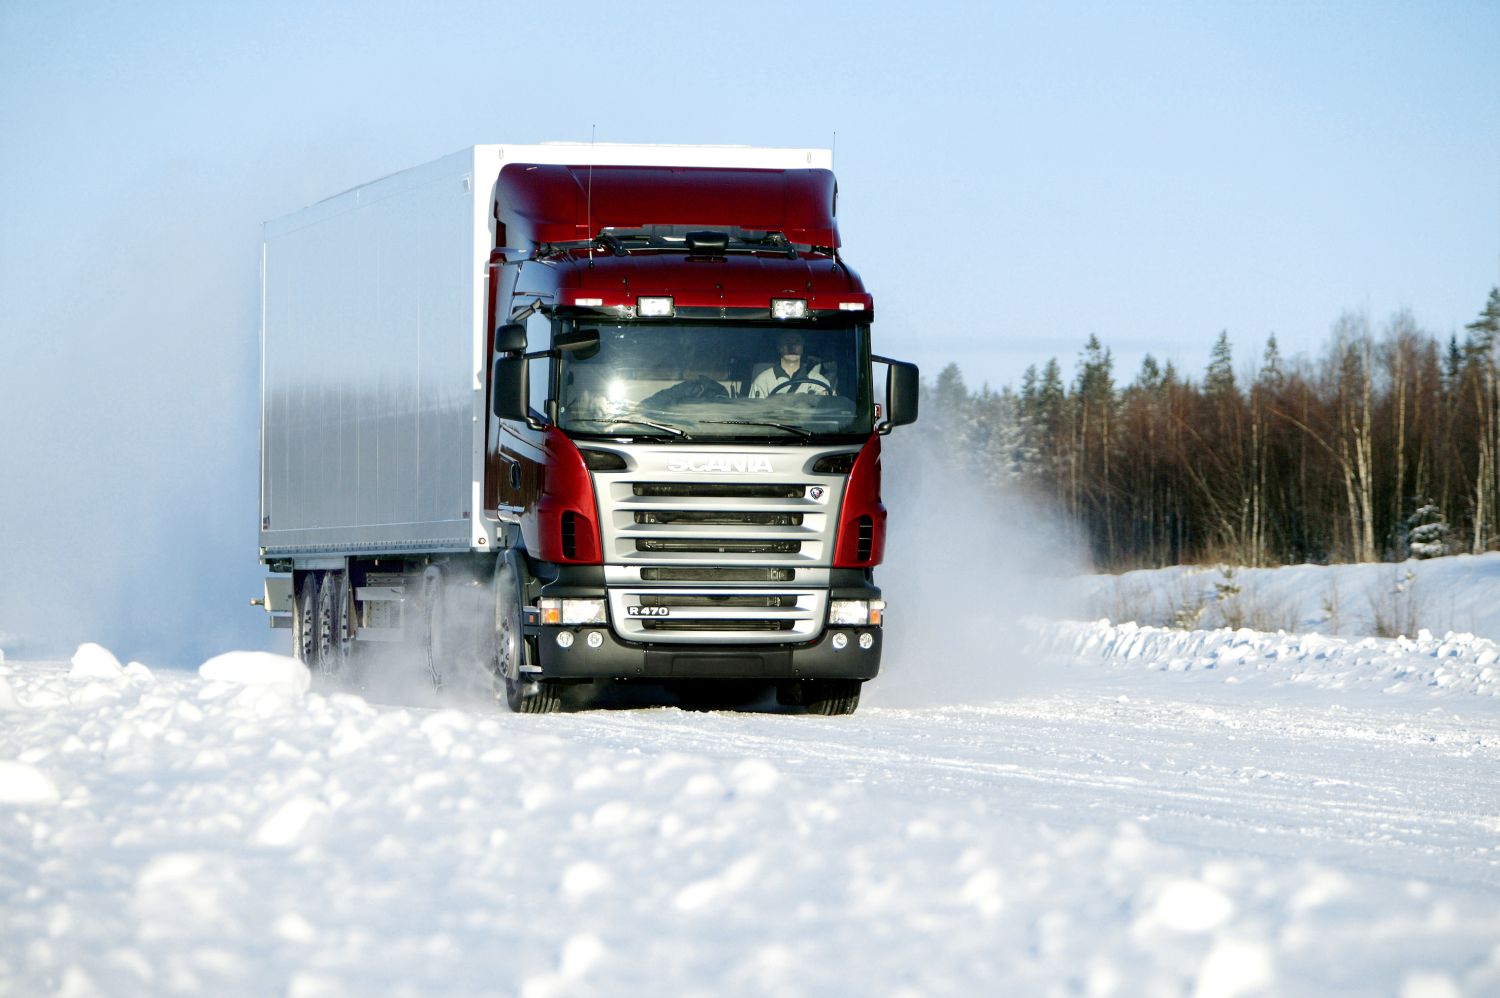 LKW winterfest machen - TruckScout24 Blog